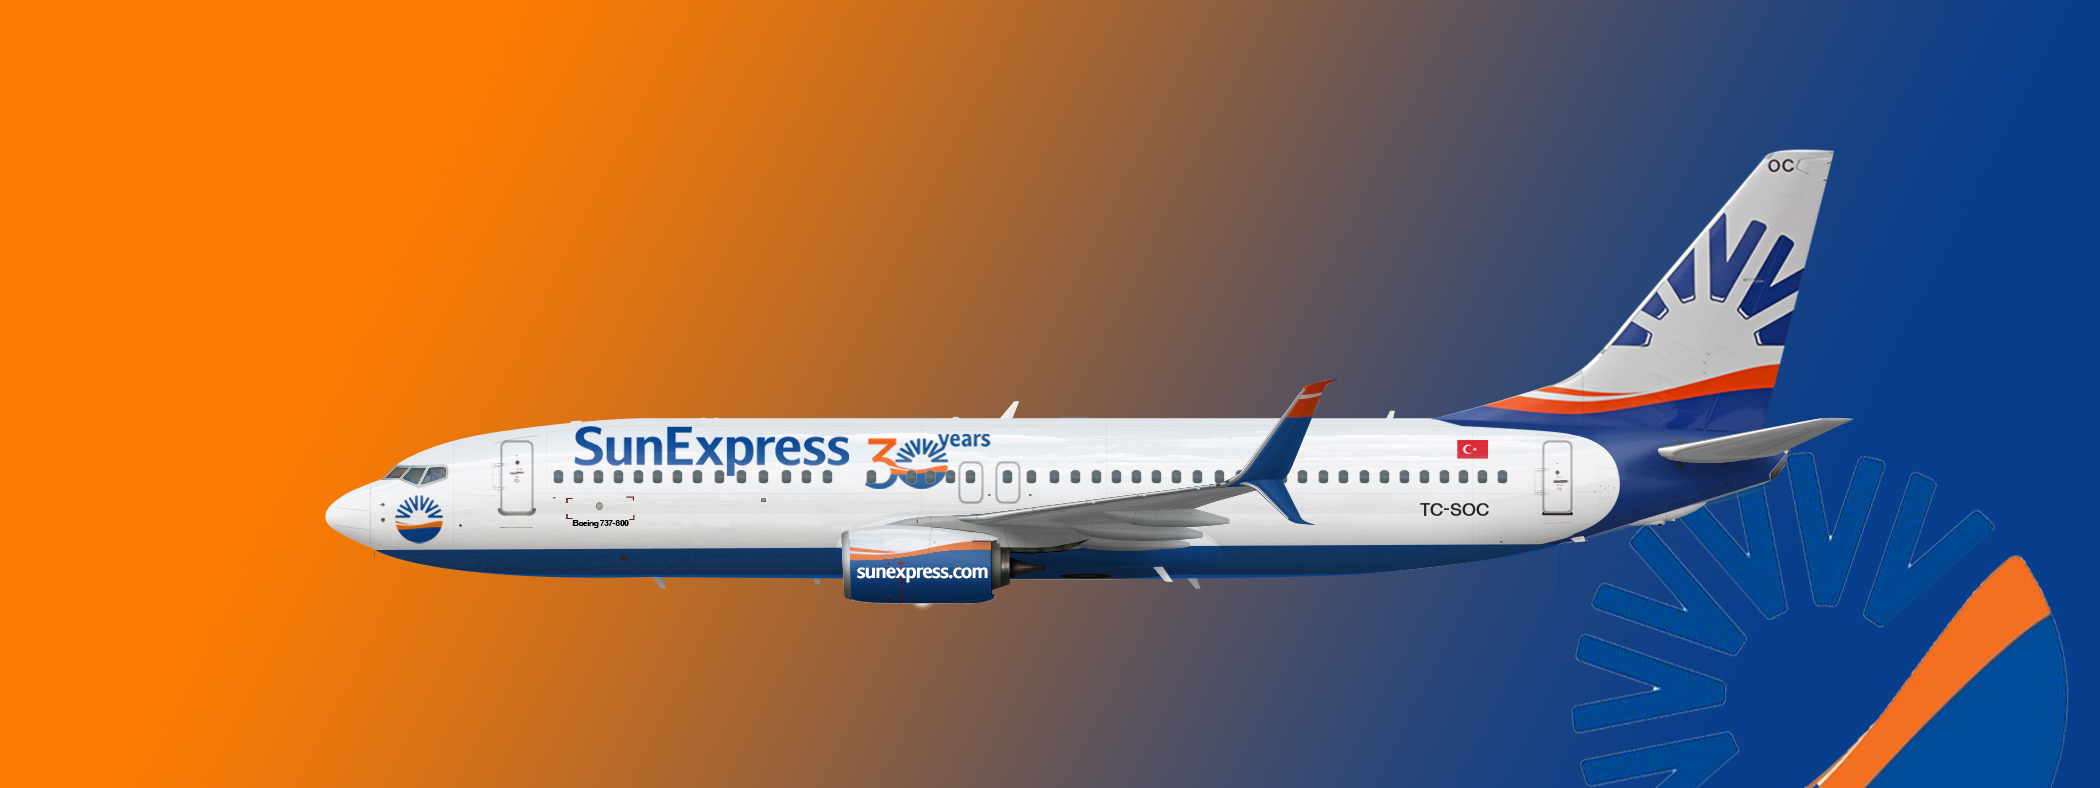 Boeing 737-800 Sun Express - mka1881's workshop - Gallery - Airline Empires